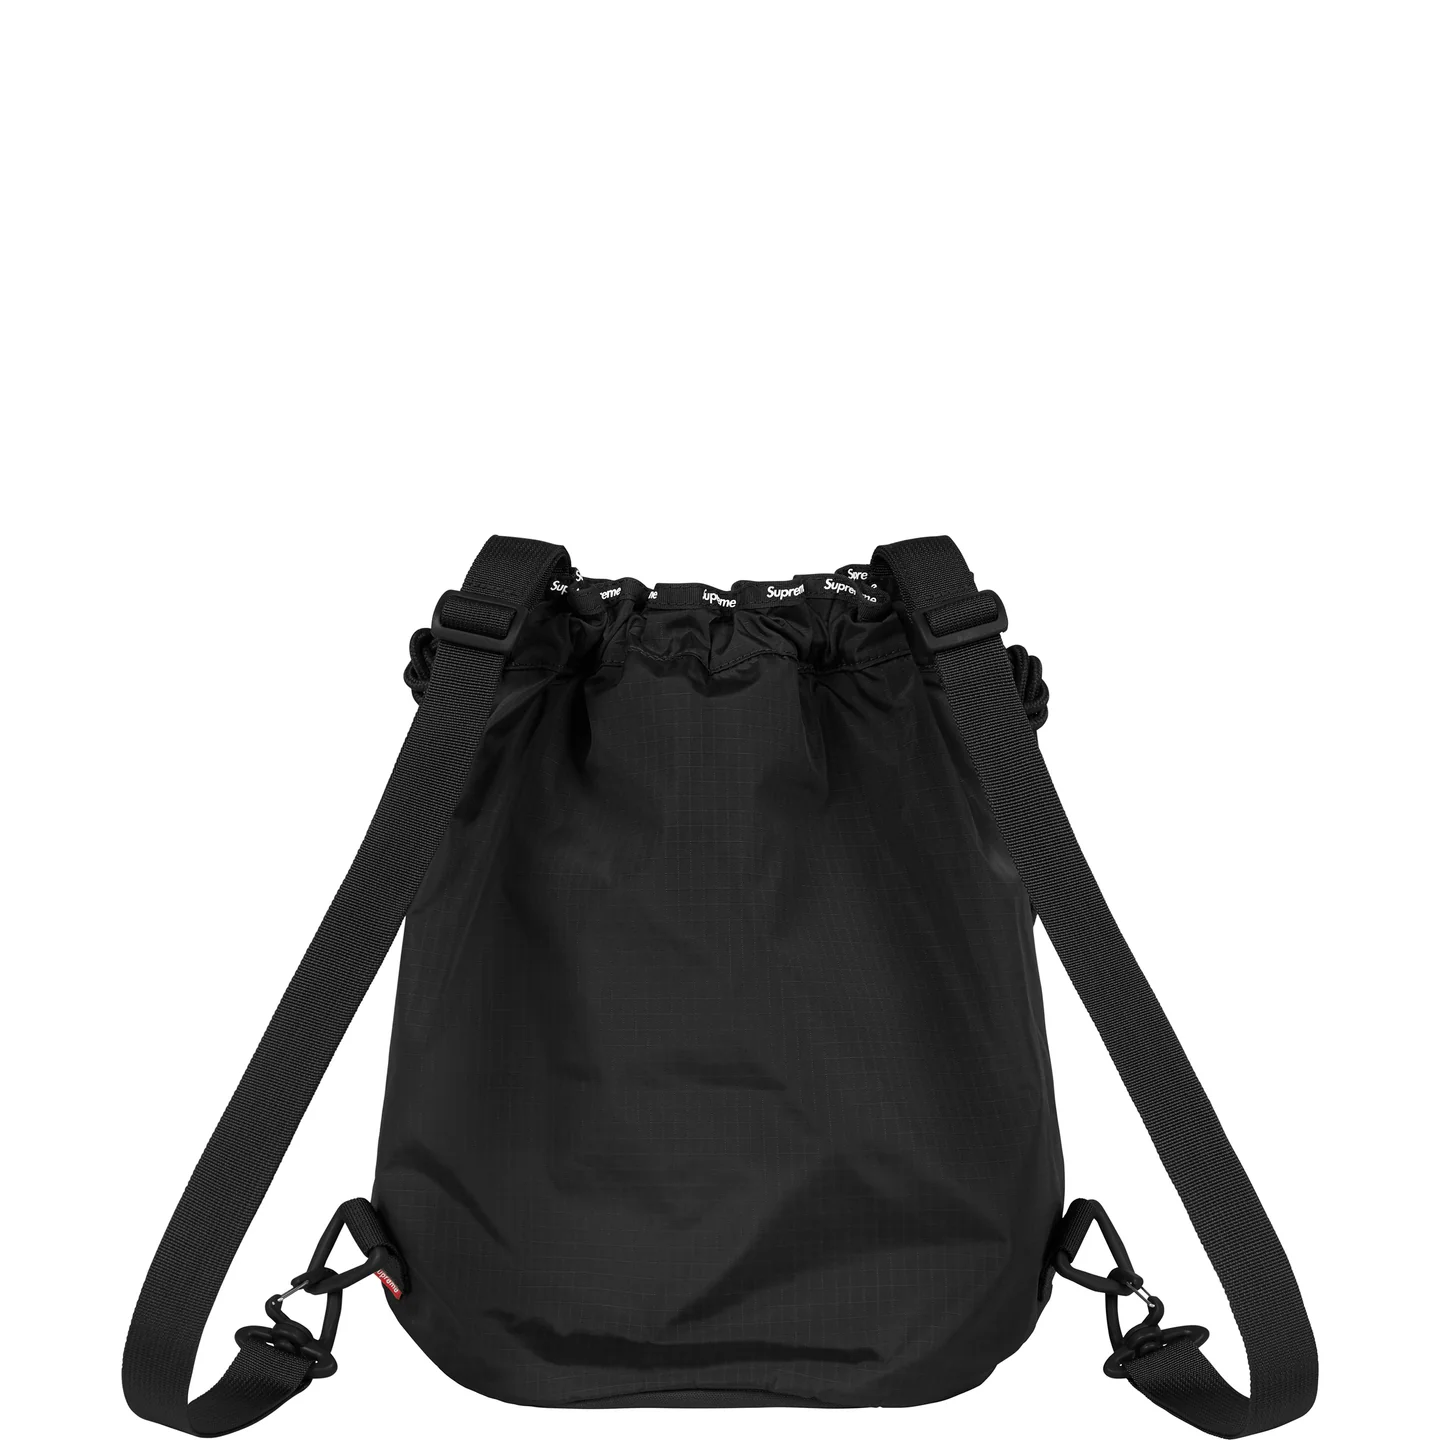 Supreme Mesh Small Backpack